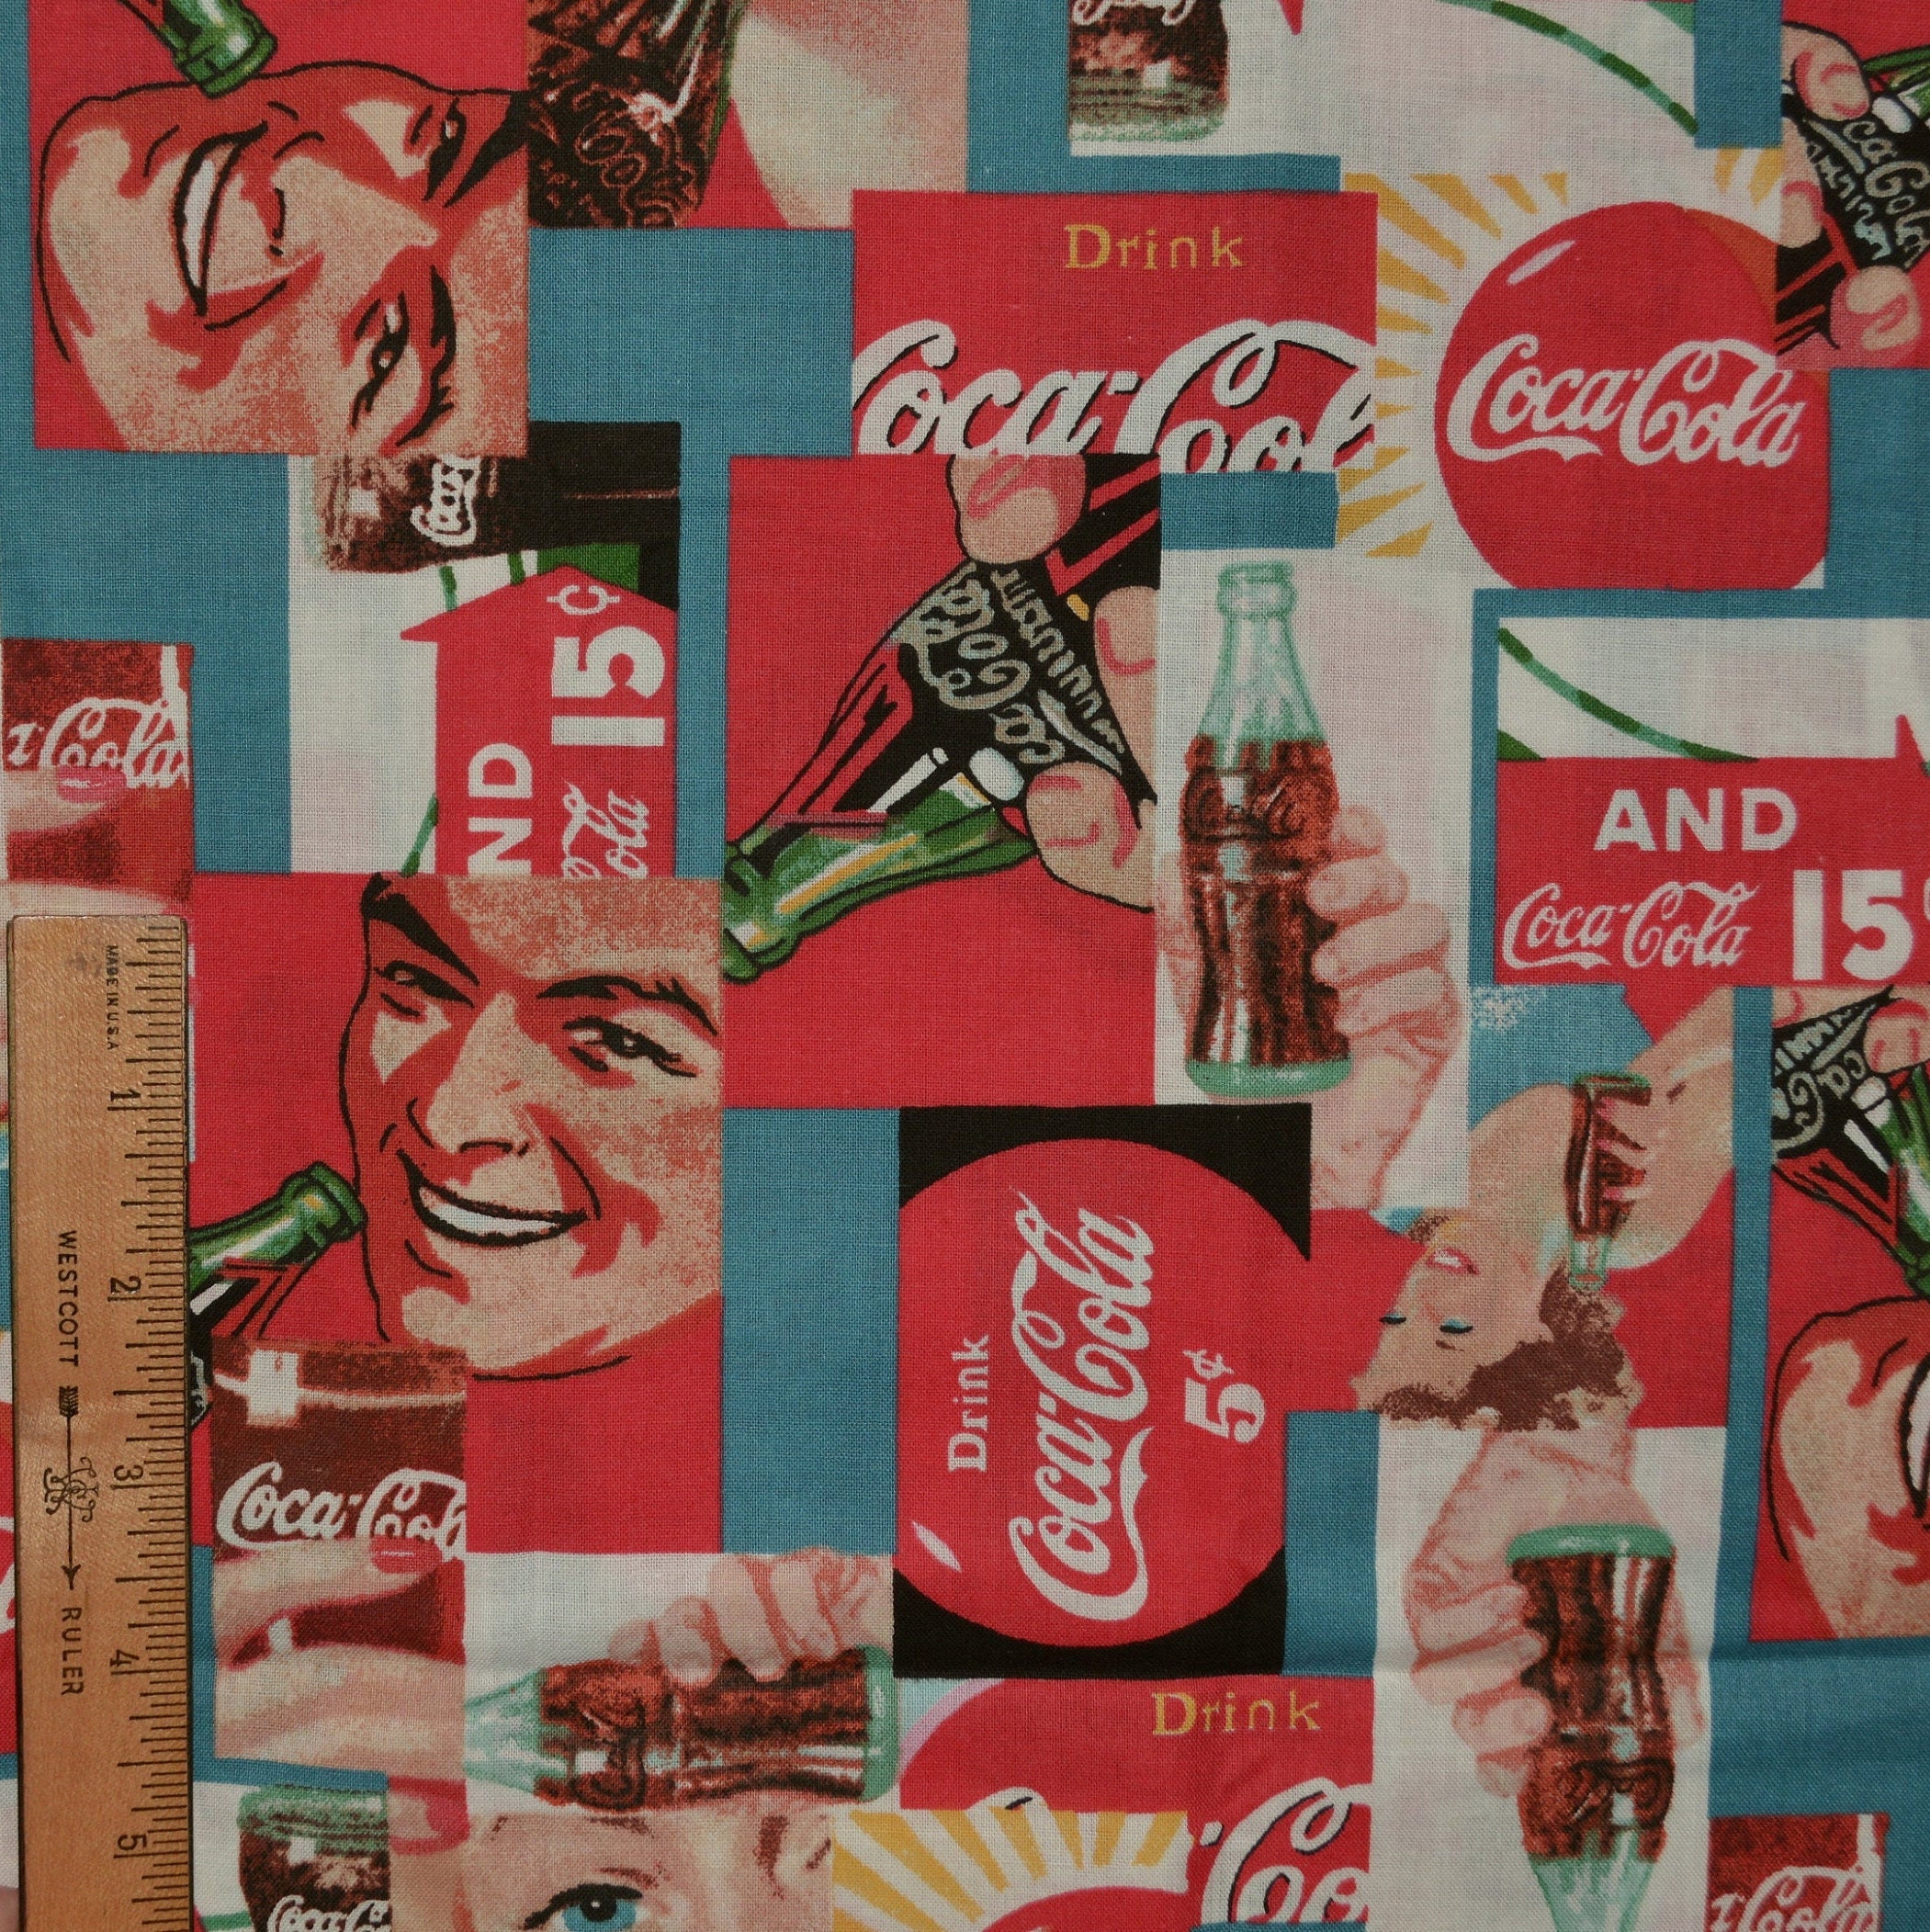 Coca Cola fabric, Coke magazine advertisement fabric half yard lengths